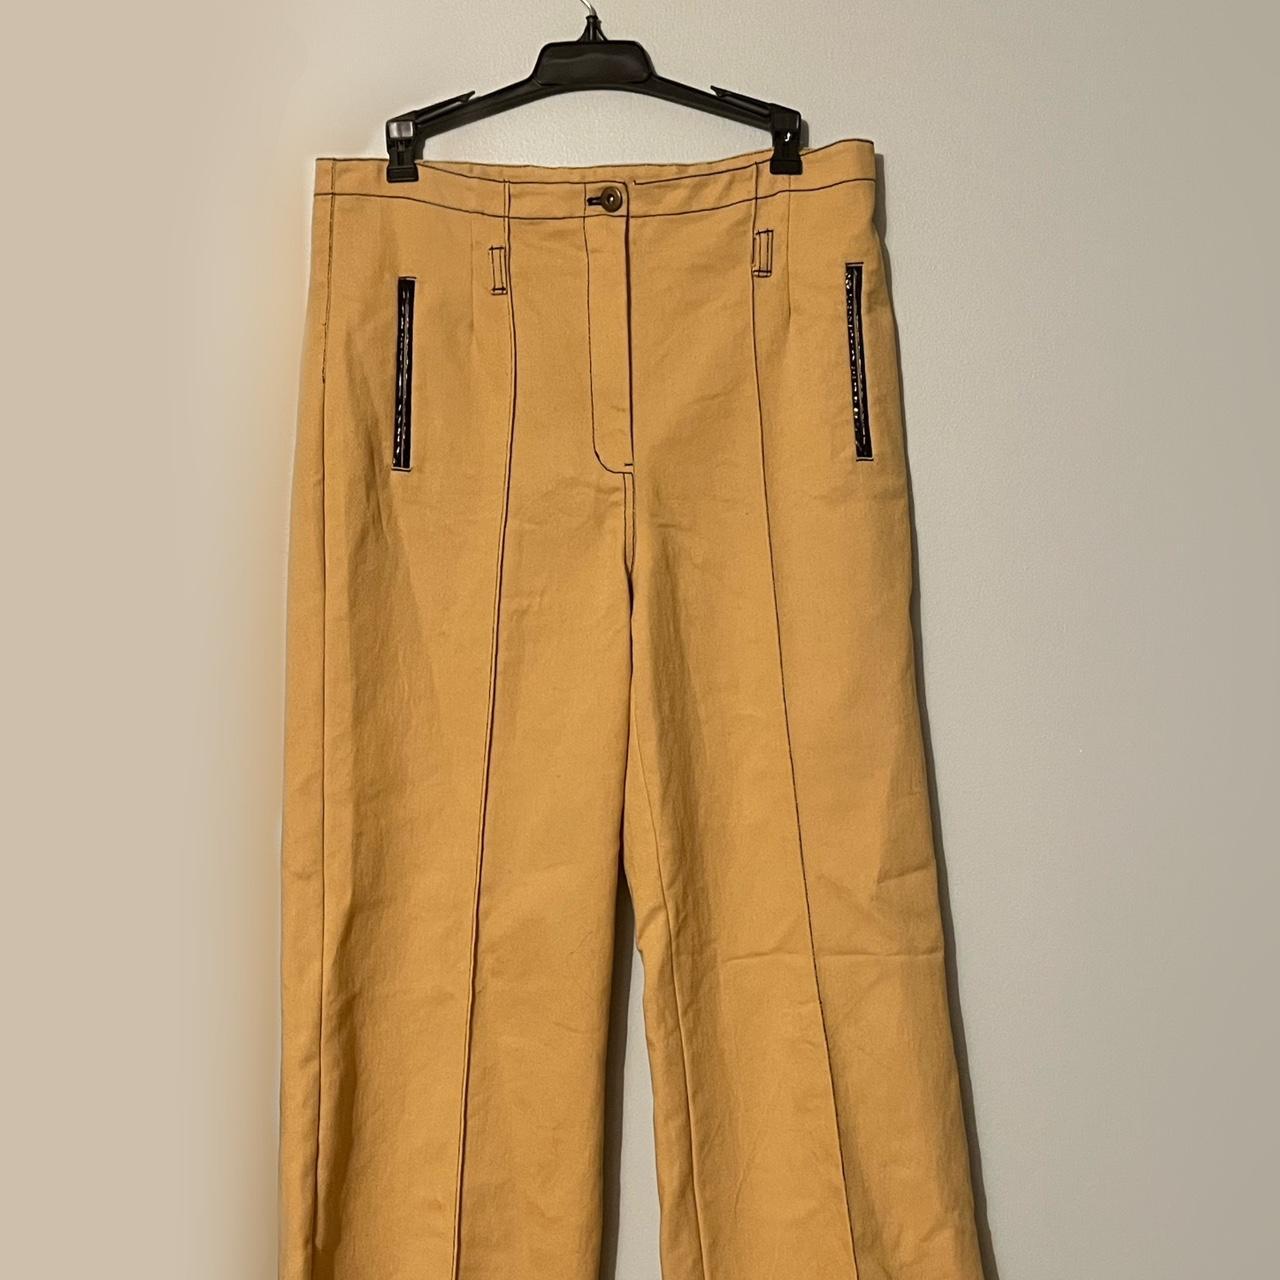 Buy Duke Stardust Men Slim Fit Sky Color Trousers at Amazon.in